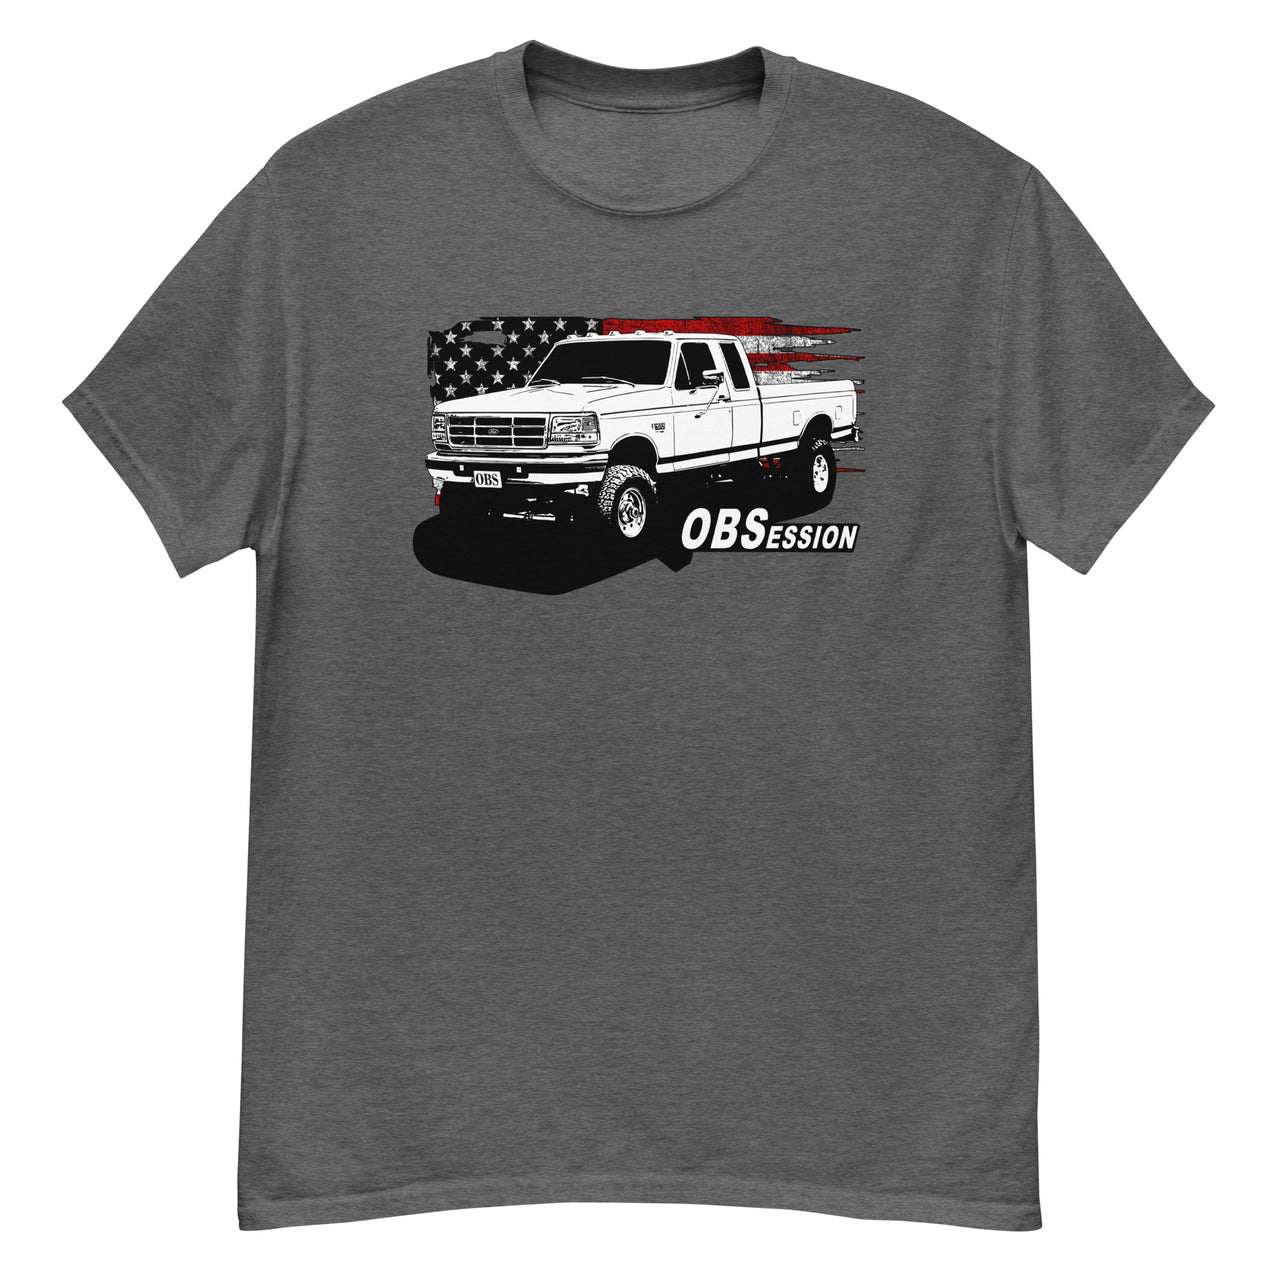 Patriotic OBS Ext Cab Truck T-shirt in grey